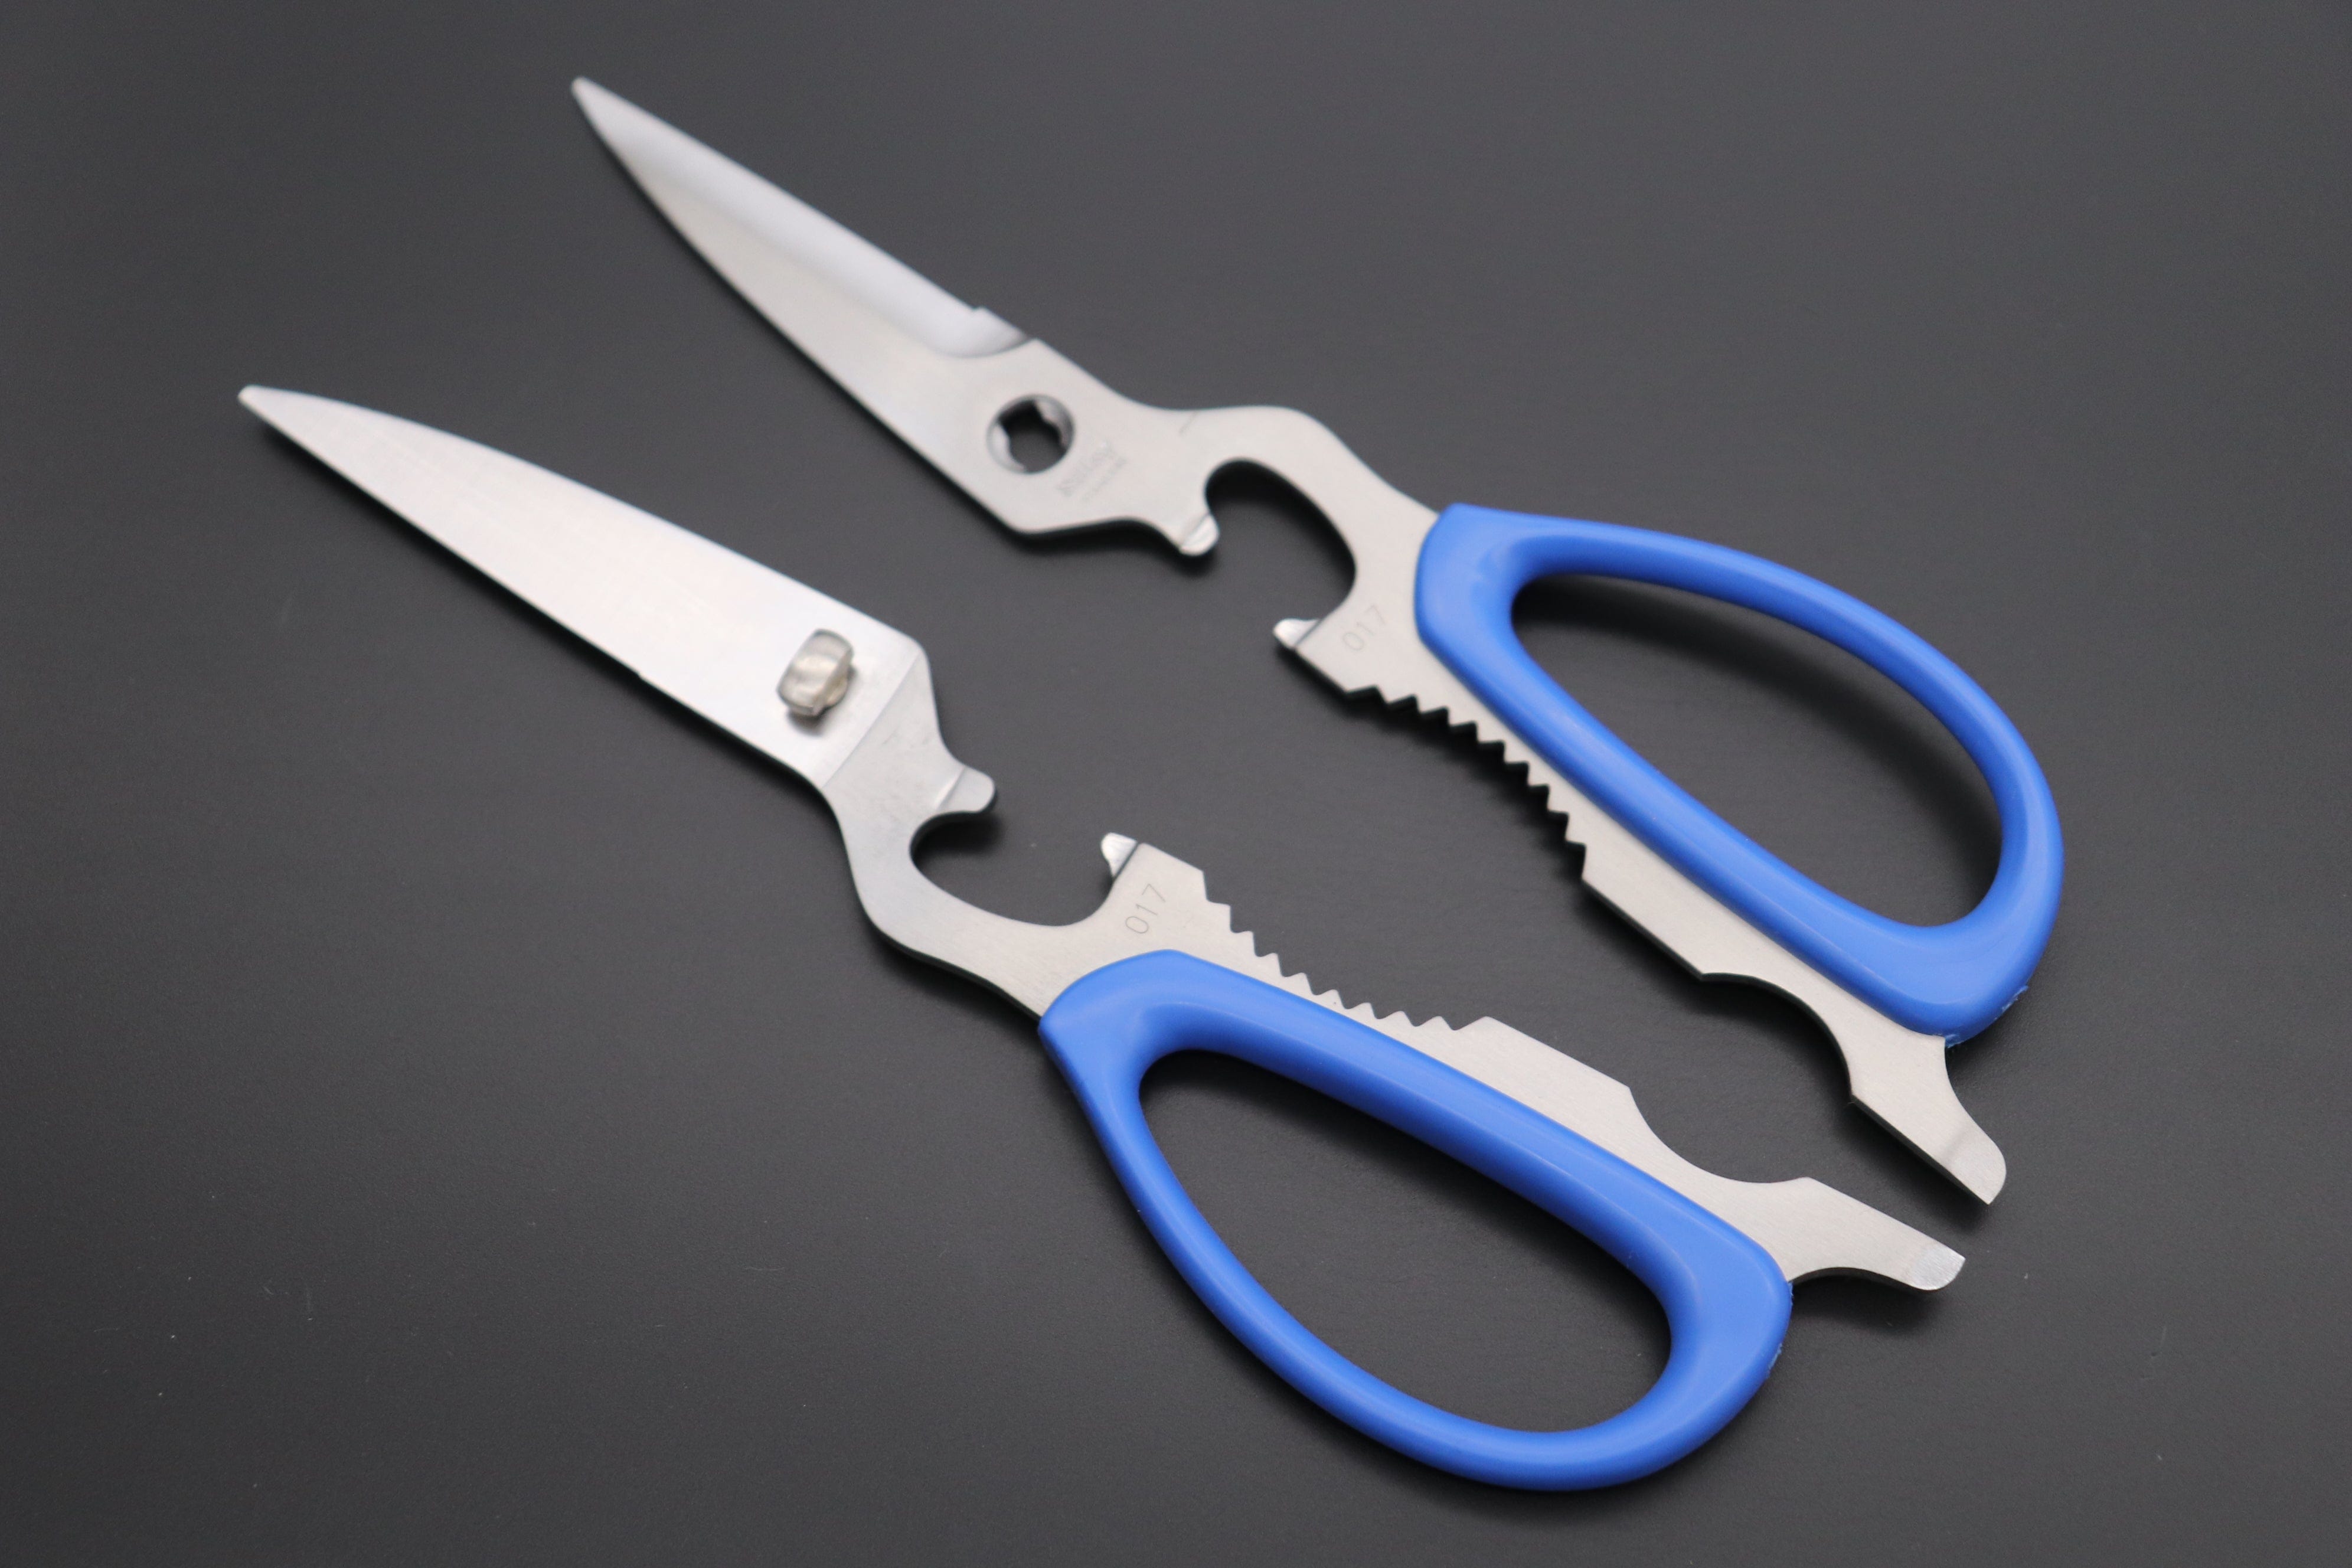 BestMulti-Purpose Kitchen Scissors, Premium Stainless Steel Solid